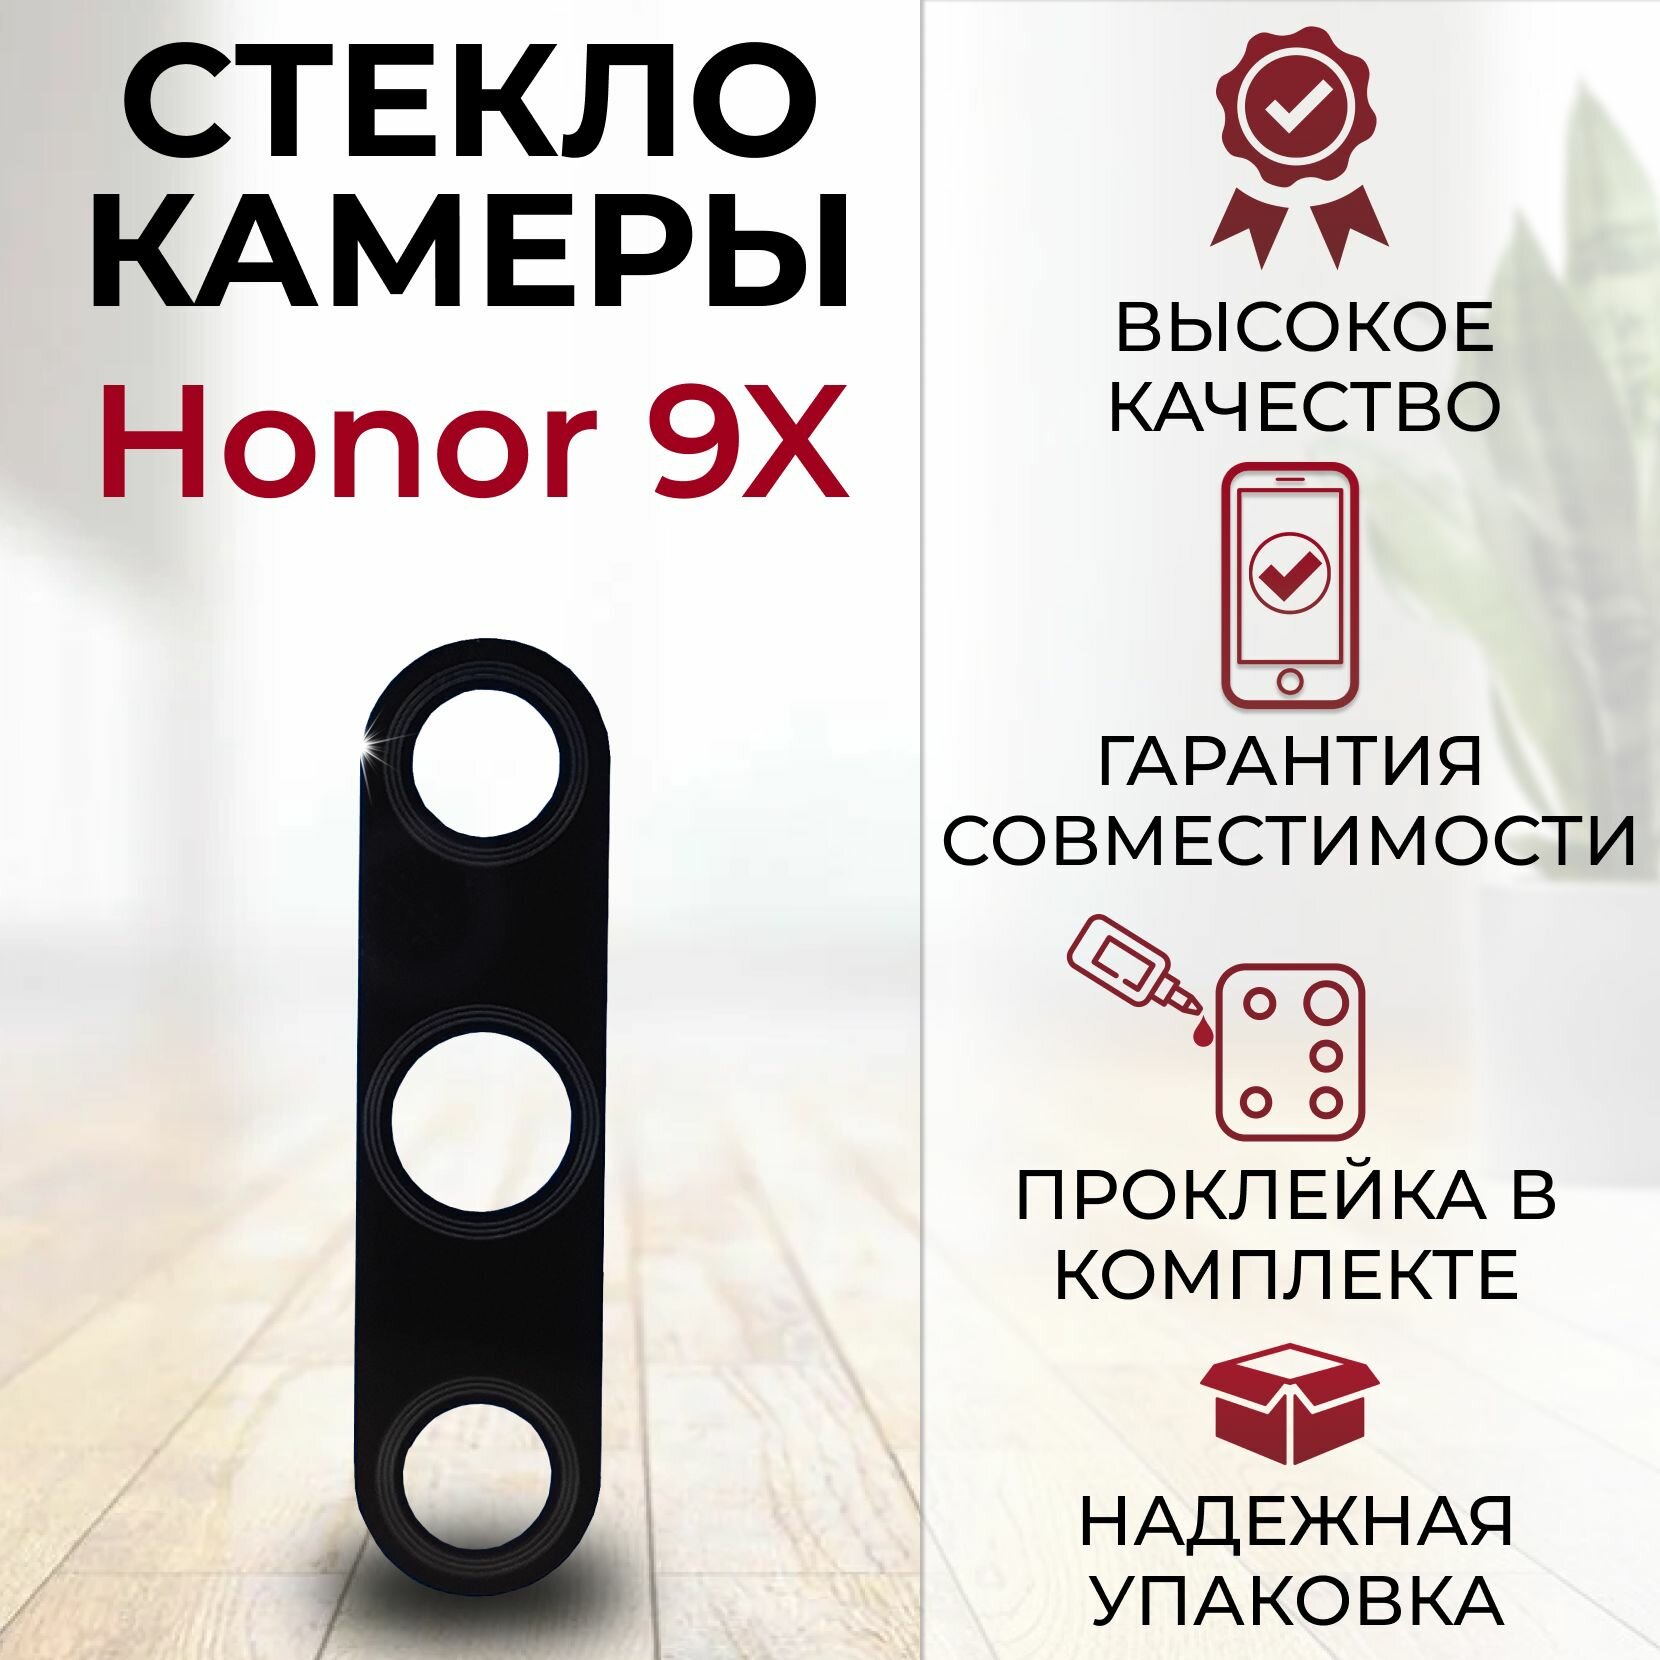 Стекло для камеры Honor 9X